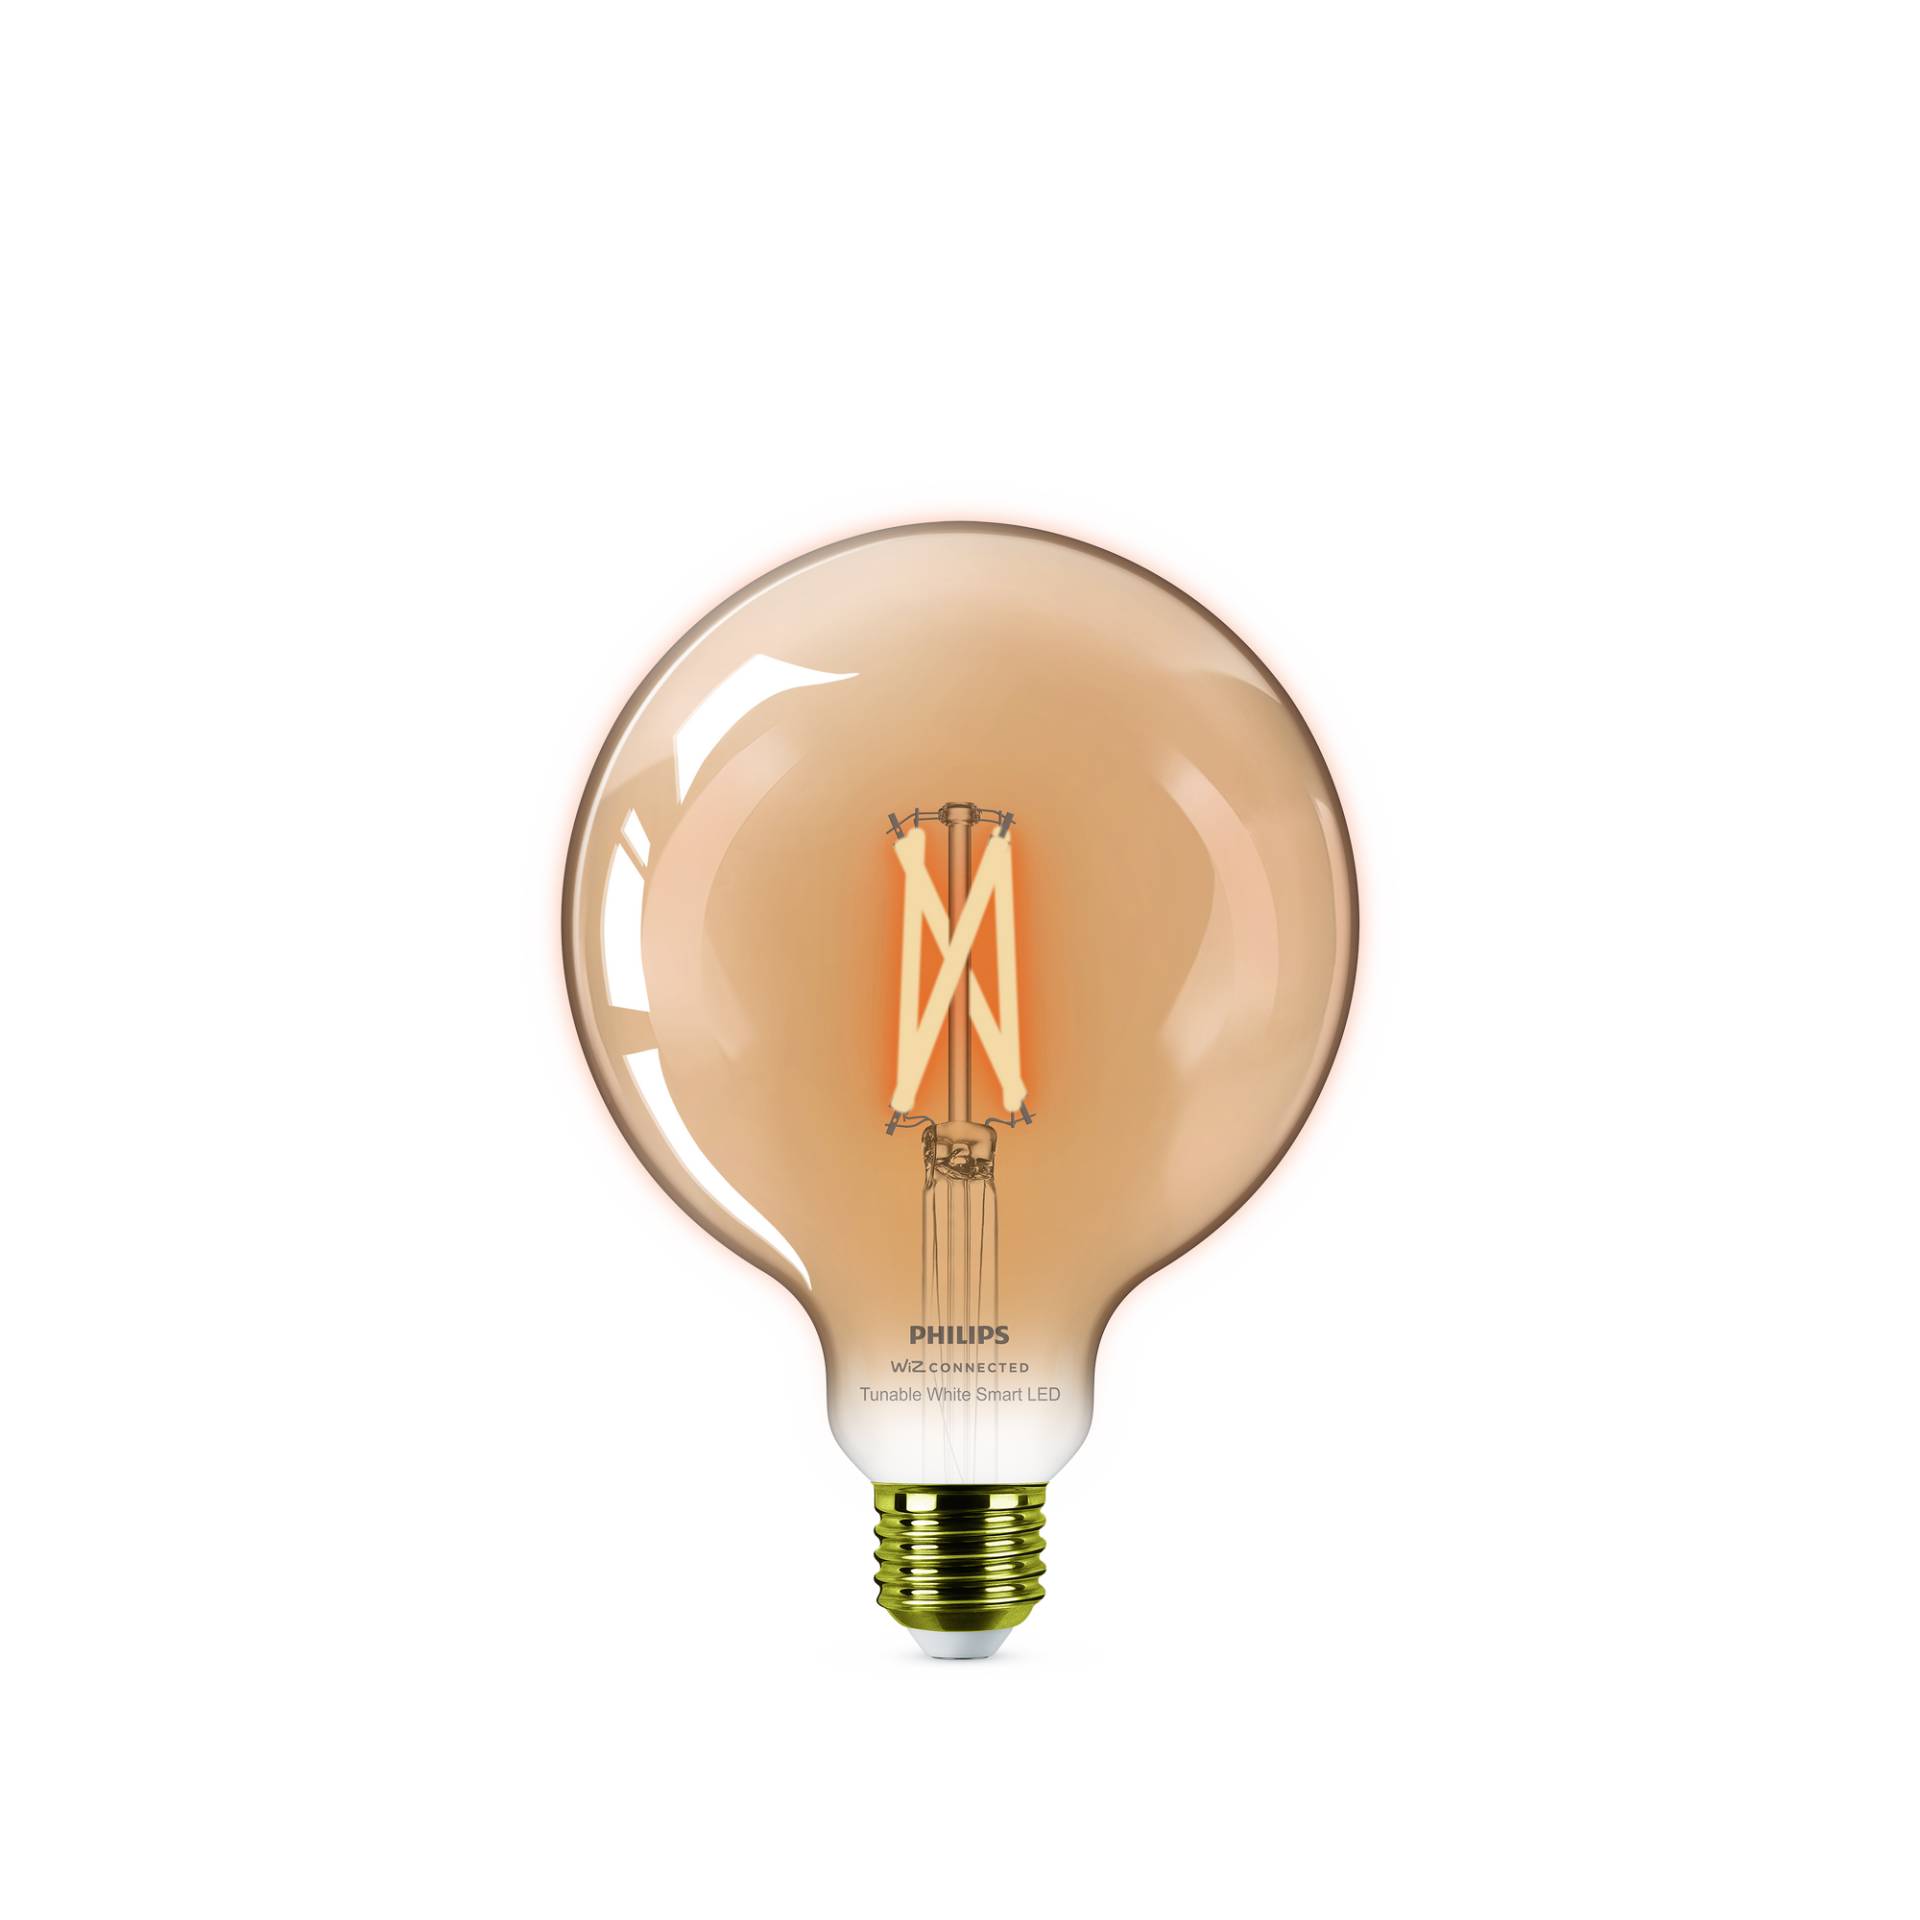 Philips LED-Filament-Lampe 'SmartLED' 640 lm E27 Globe amber 12,5 x 18 cm von Philips